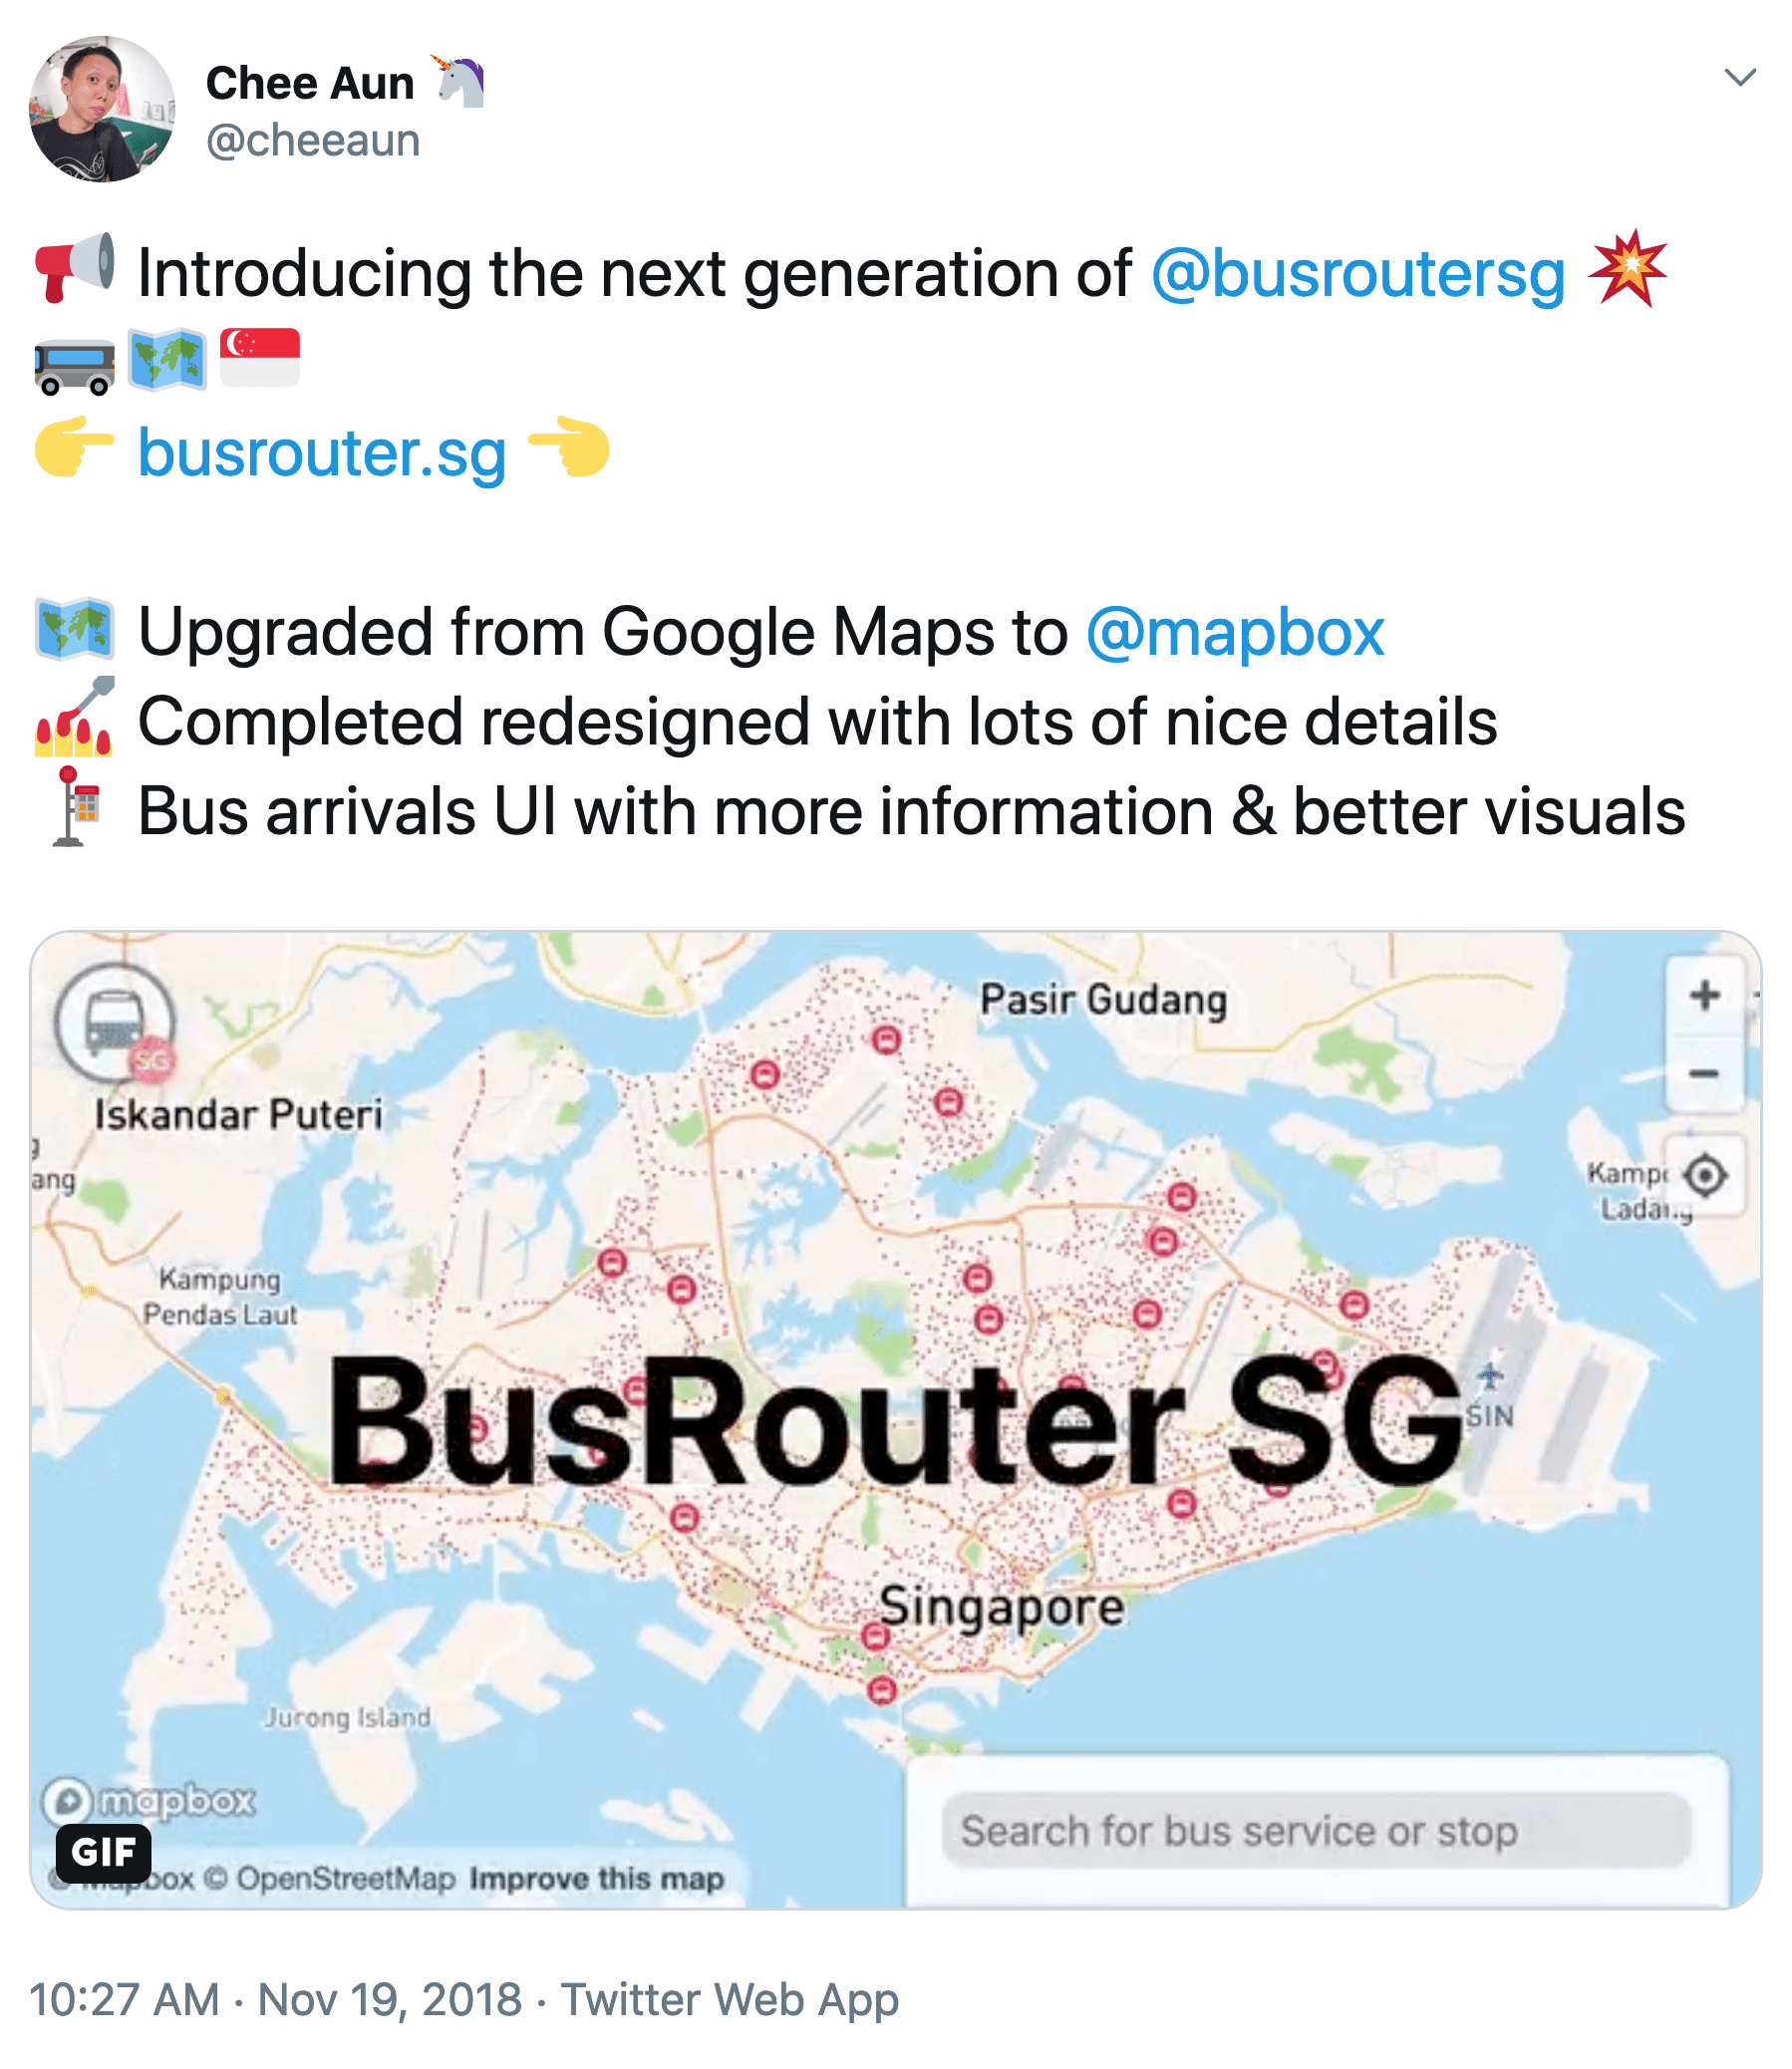 @cheeaun's tweet, introducing the next generation BusRouter SG